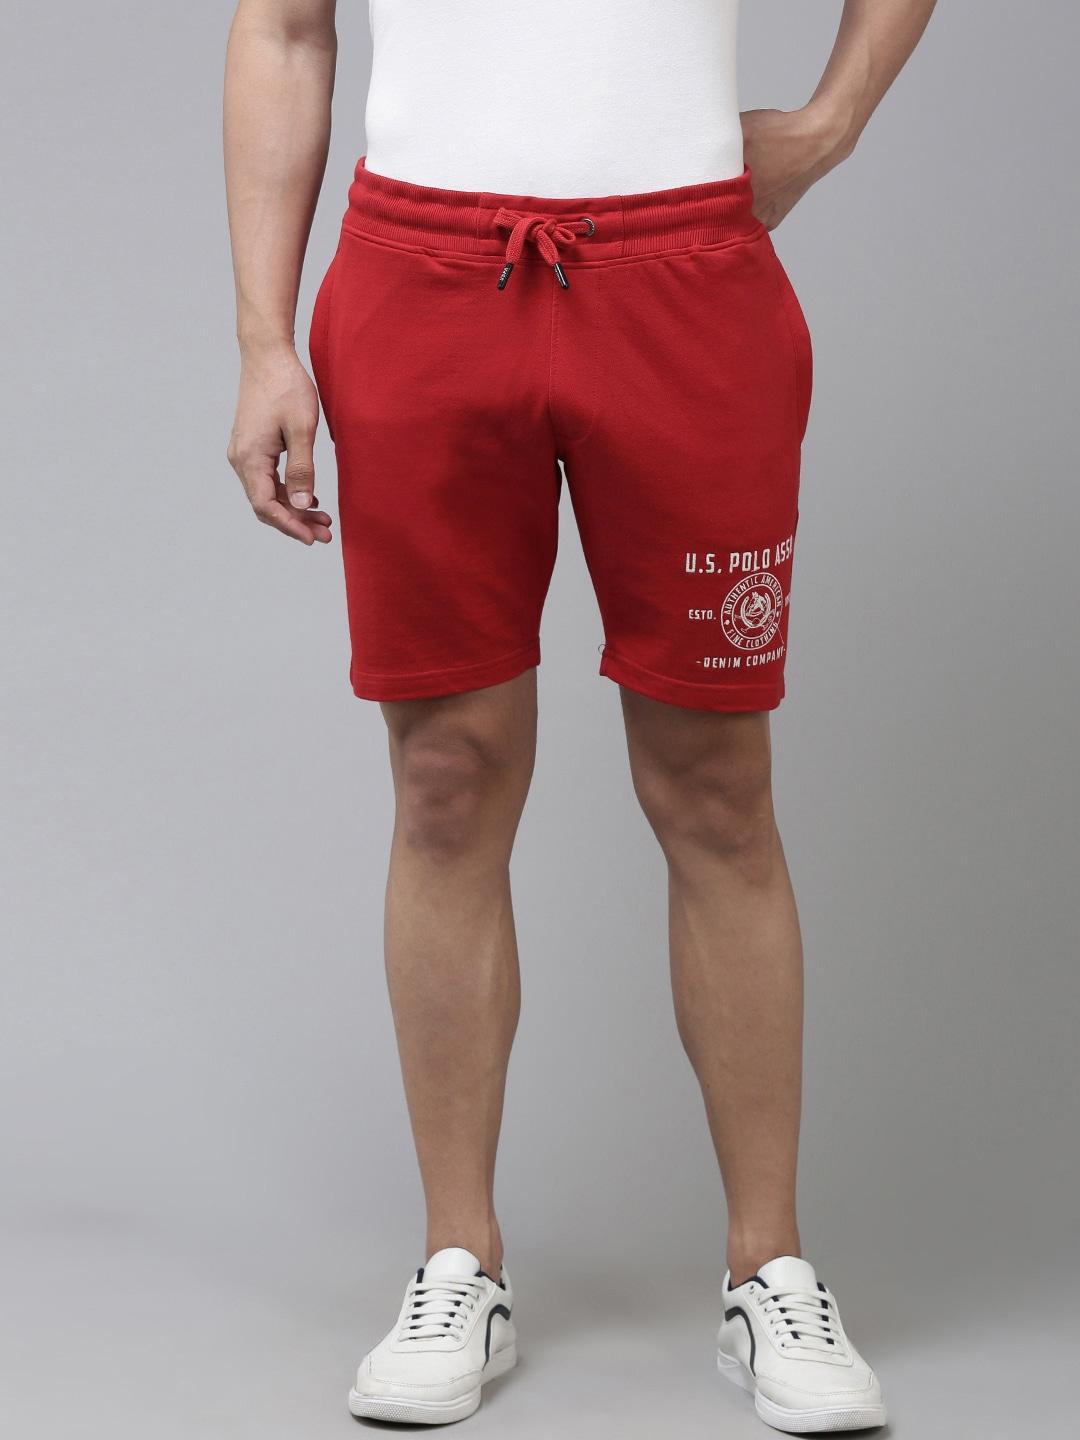 u.s.-polo-assn.-denim-co.-men-red-typography-printed-regular-shorts